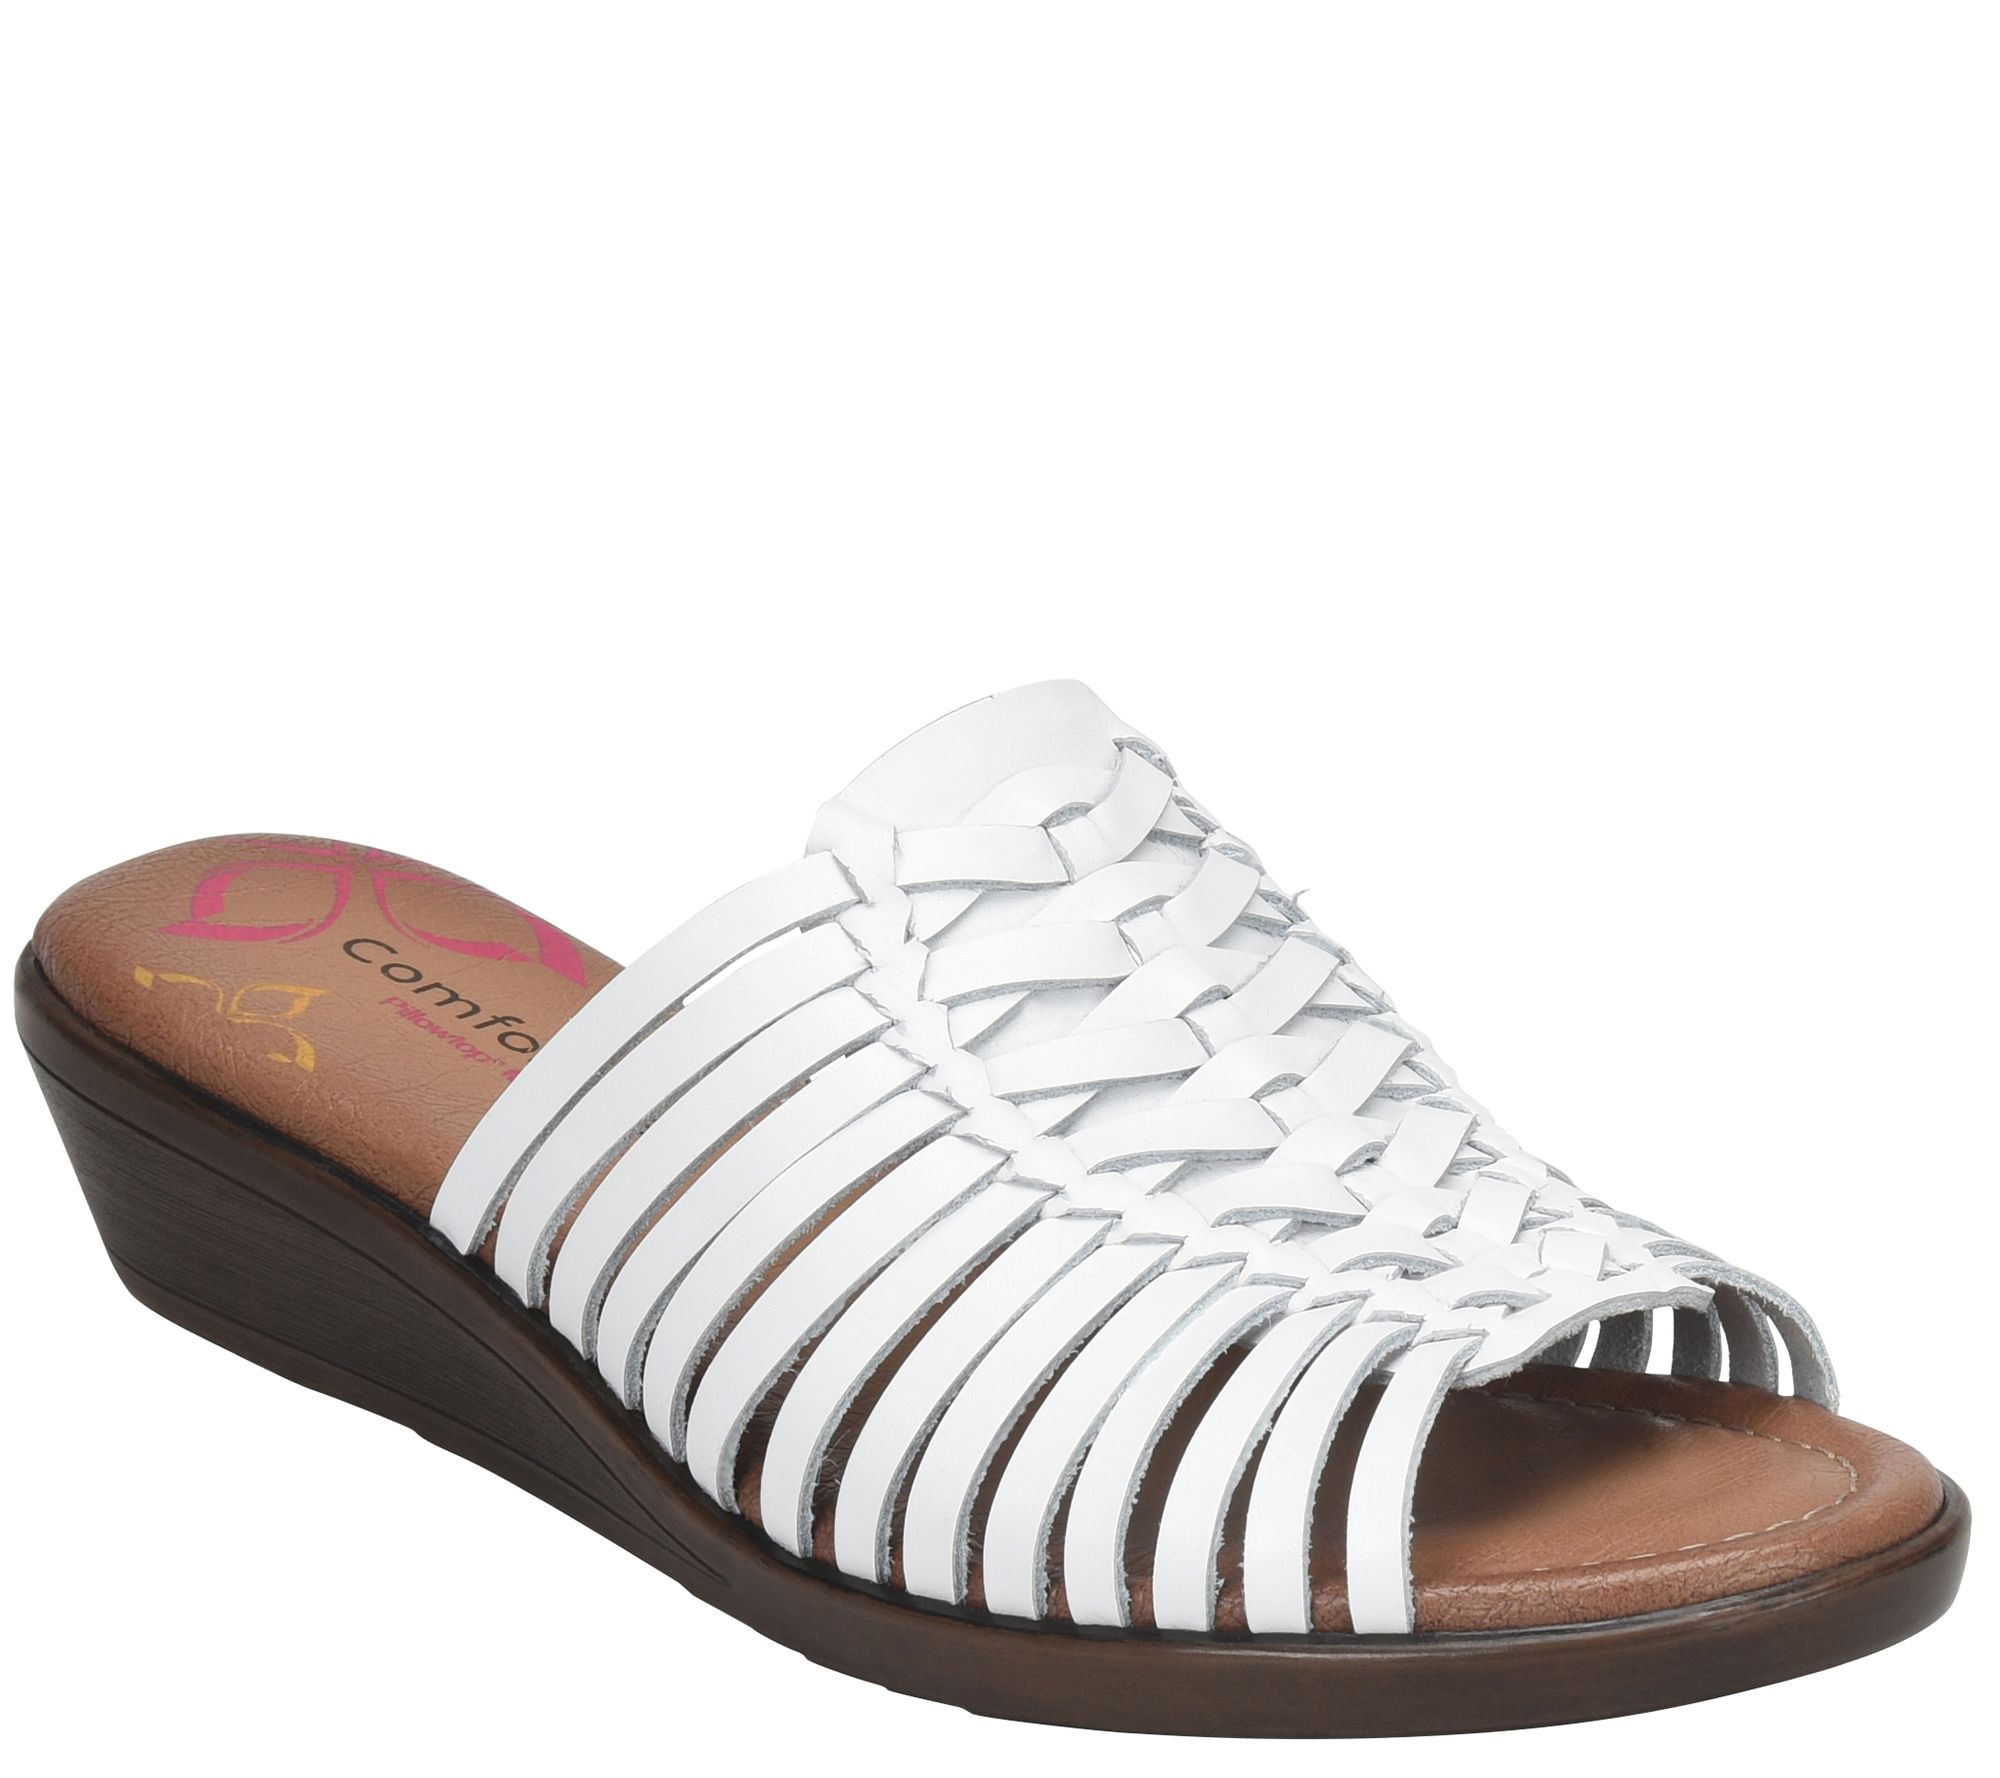 Comfortiva Huarache Wedge Sandals 